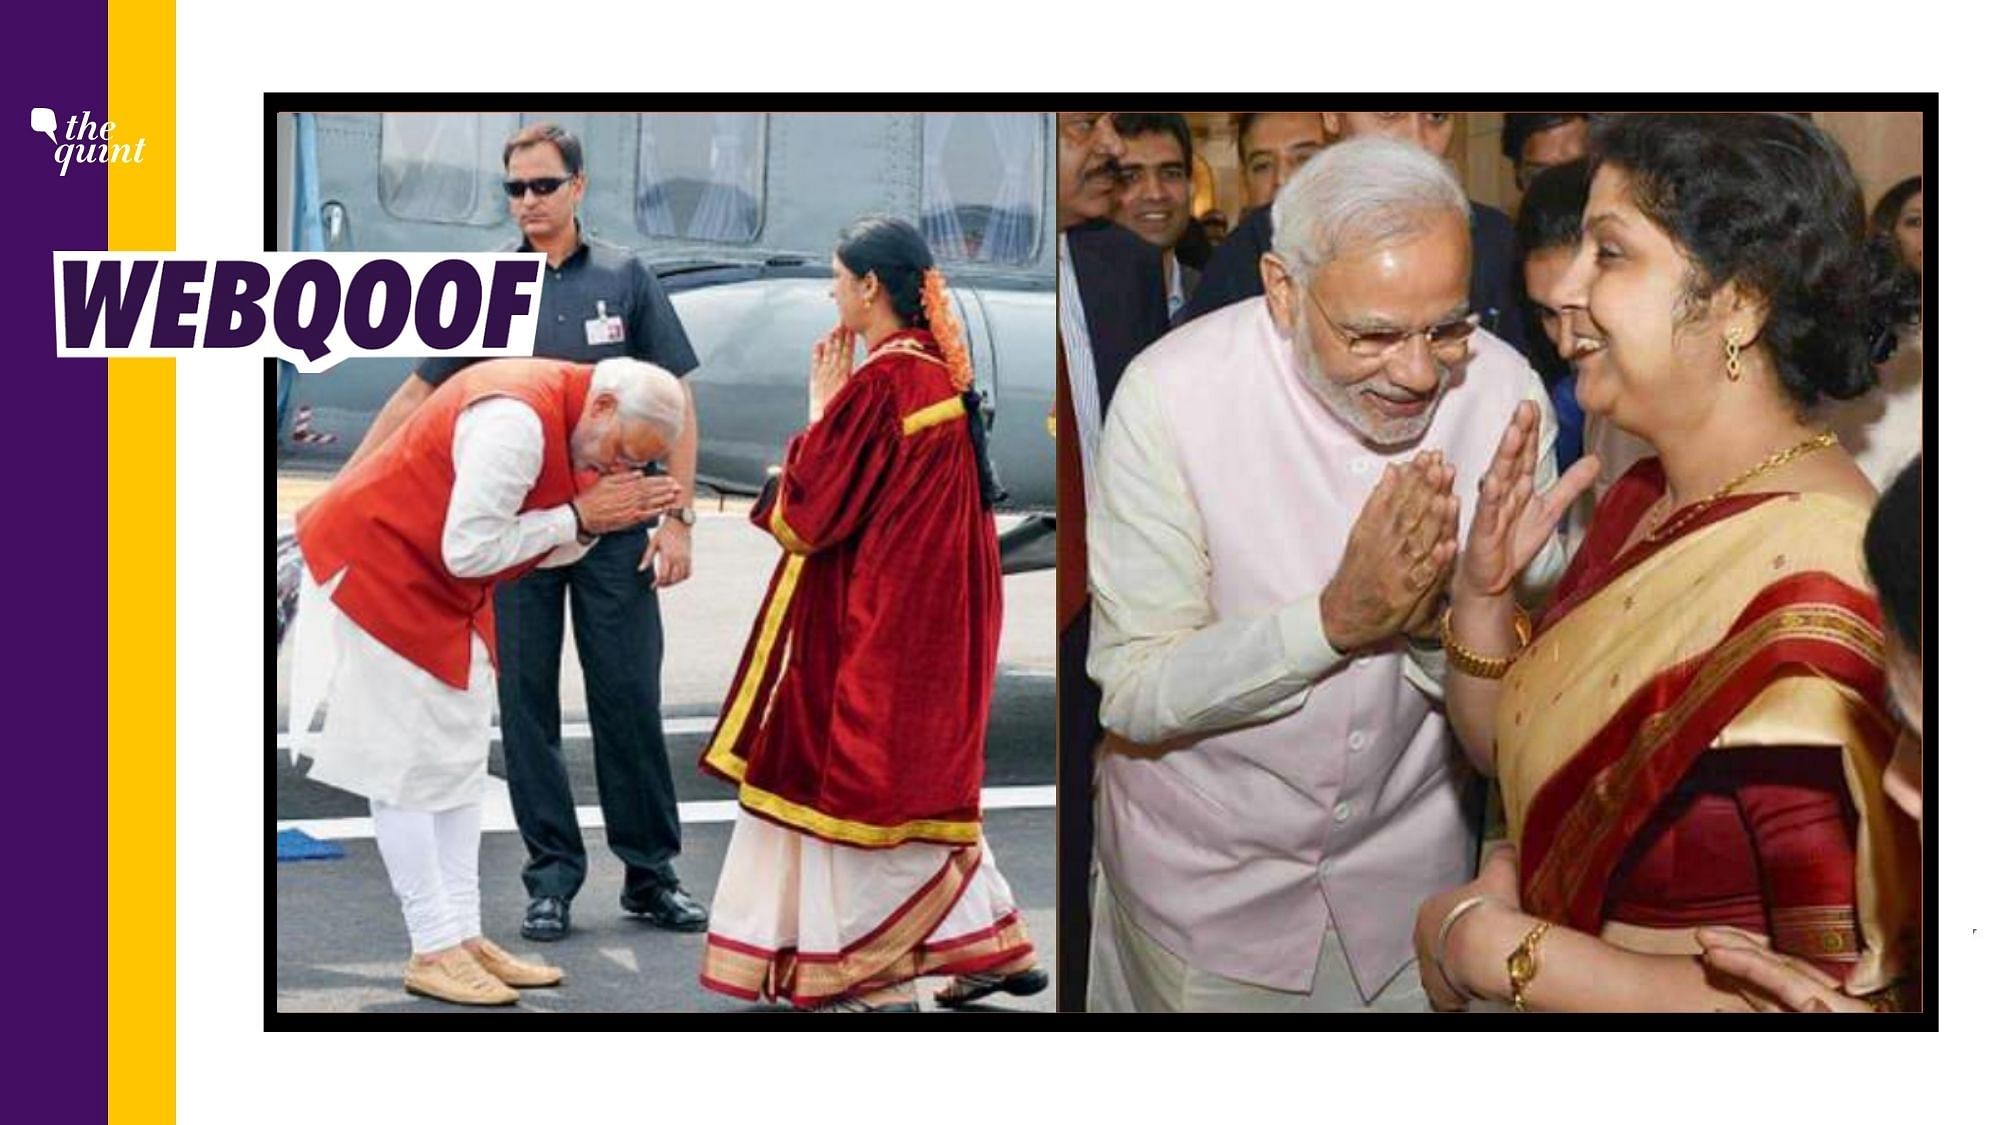 Social media users falsely claimed that the viral images show Prime Minister Narendra Modi greeting Gautam Adani’s wife, Priti Adani.